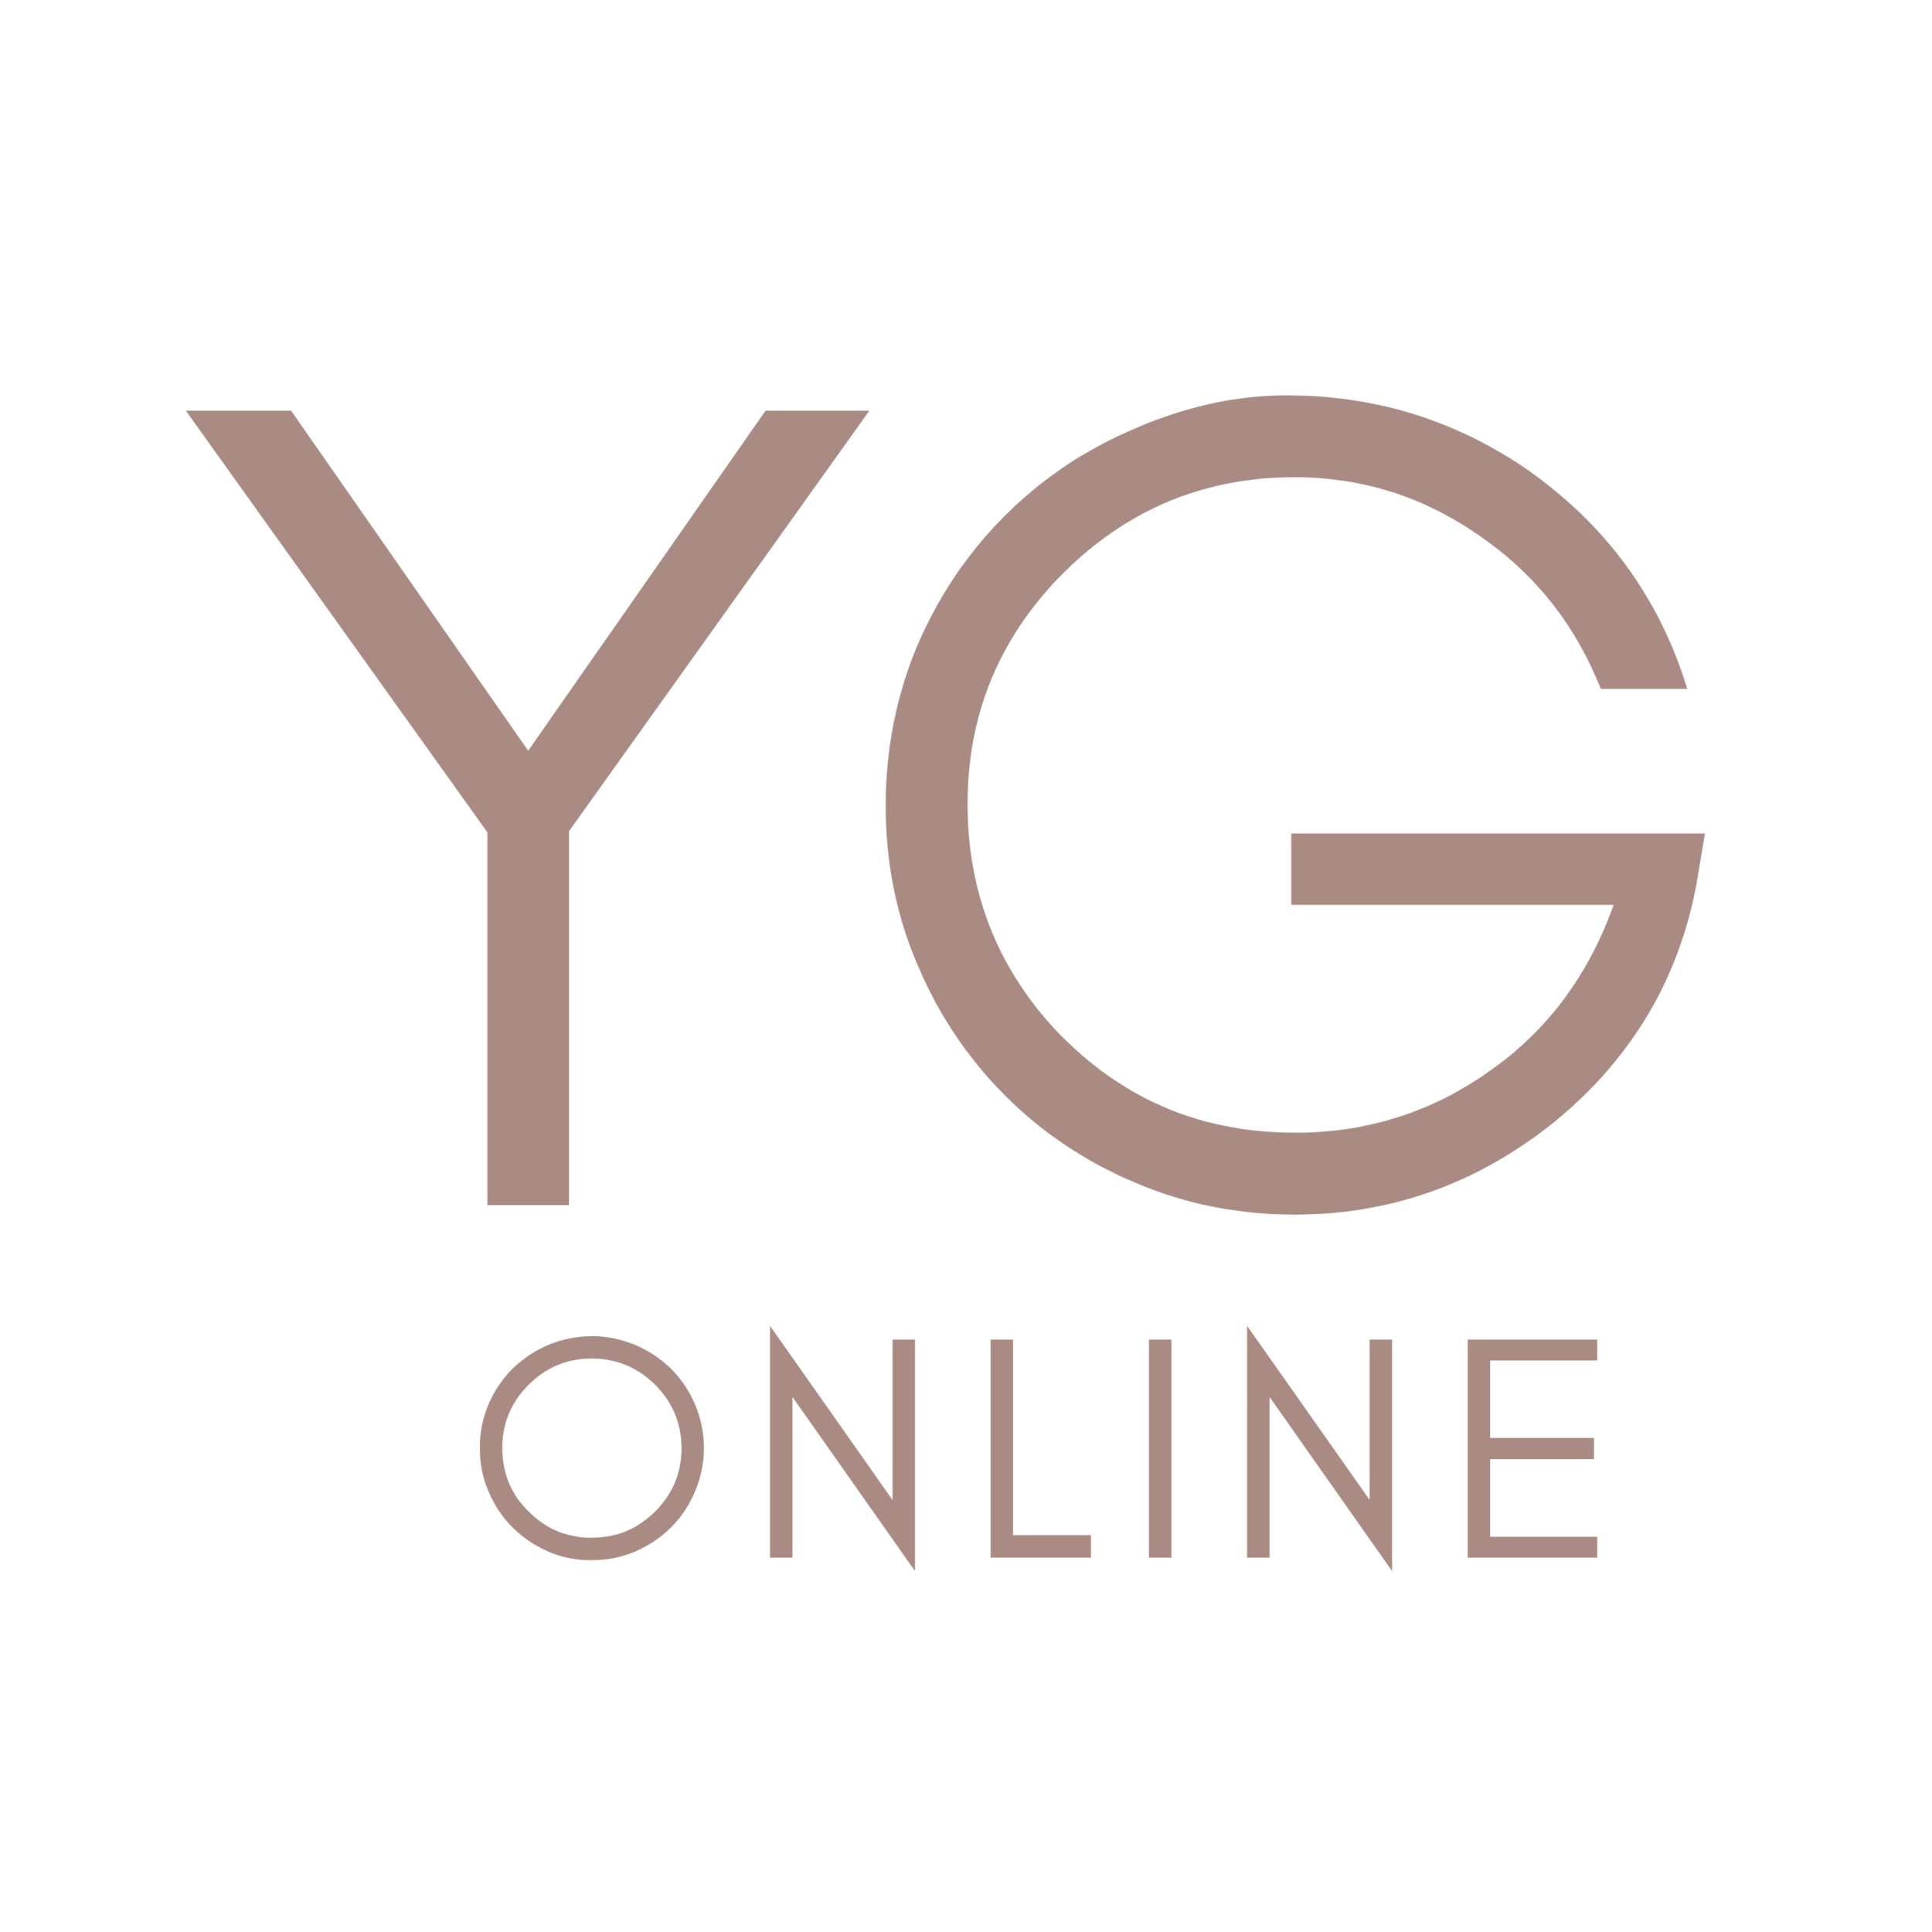 YG Online &mdash; Your At-Home Yoga Studio